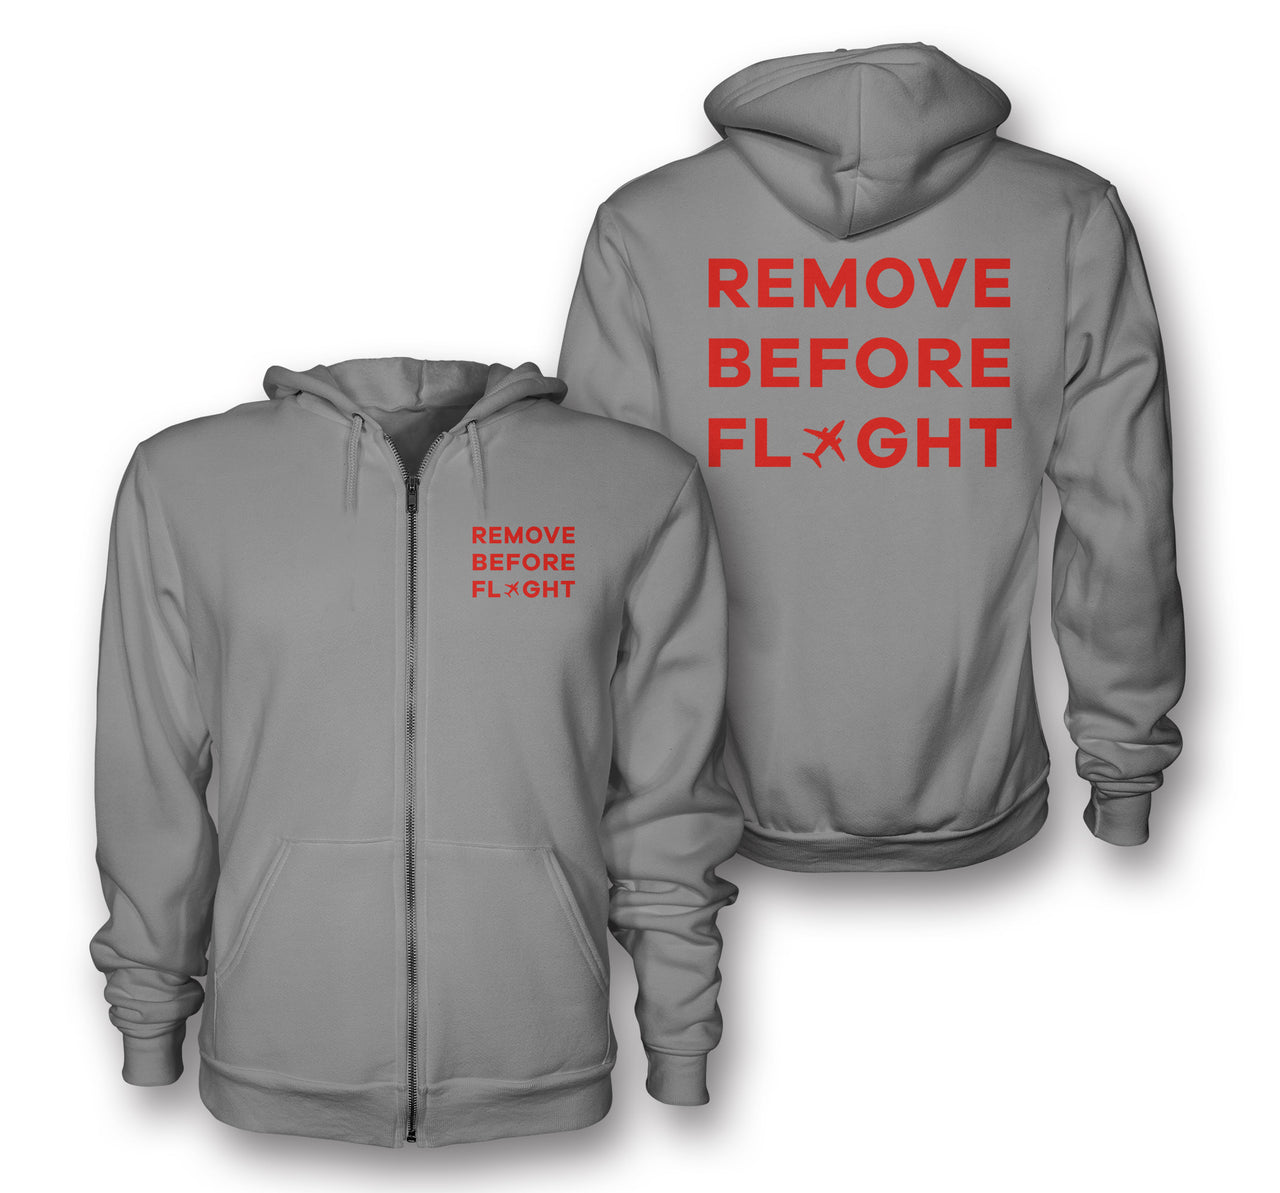 Remove Before Flight Designed Zipped Hoodies